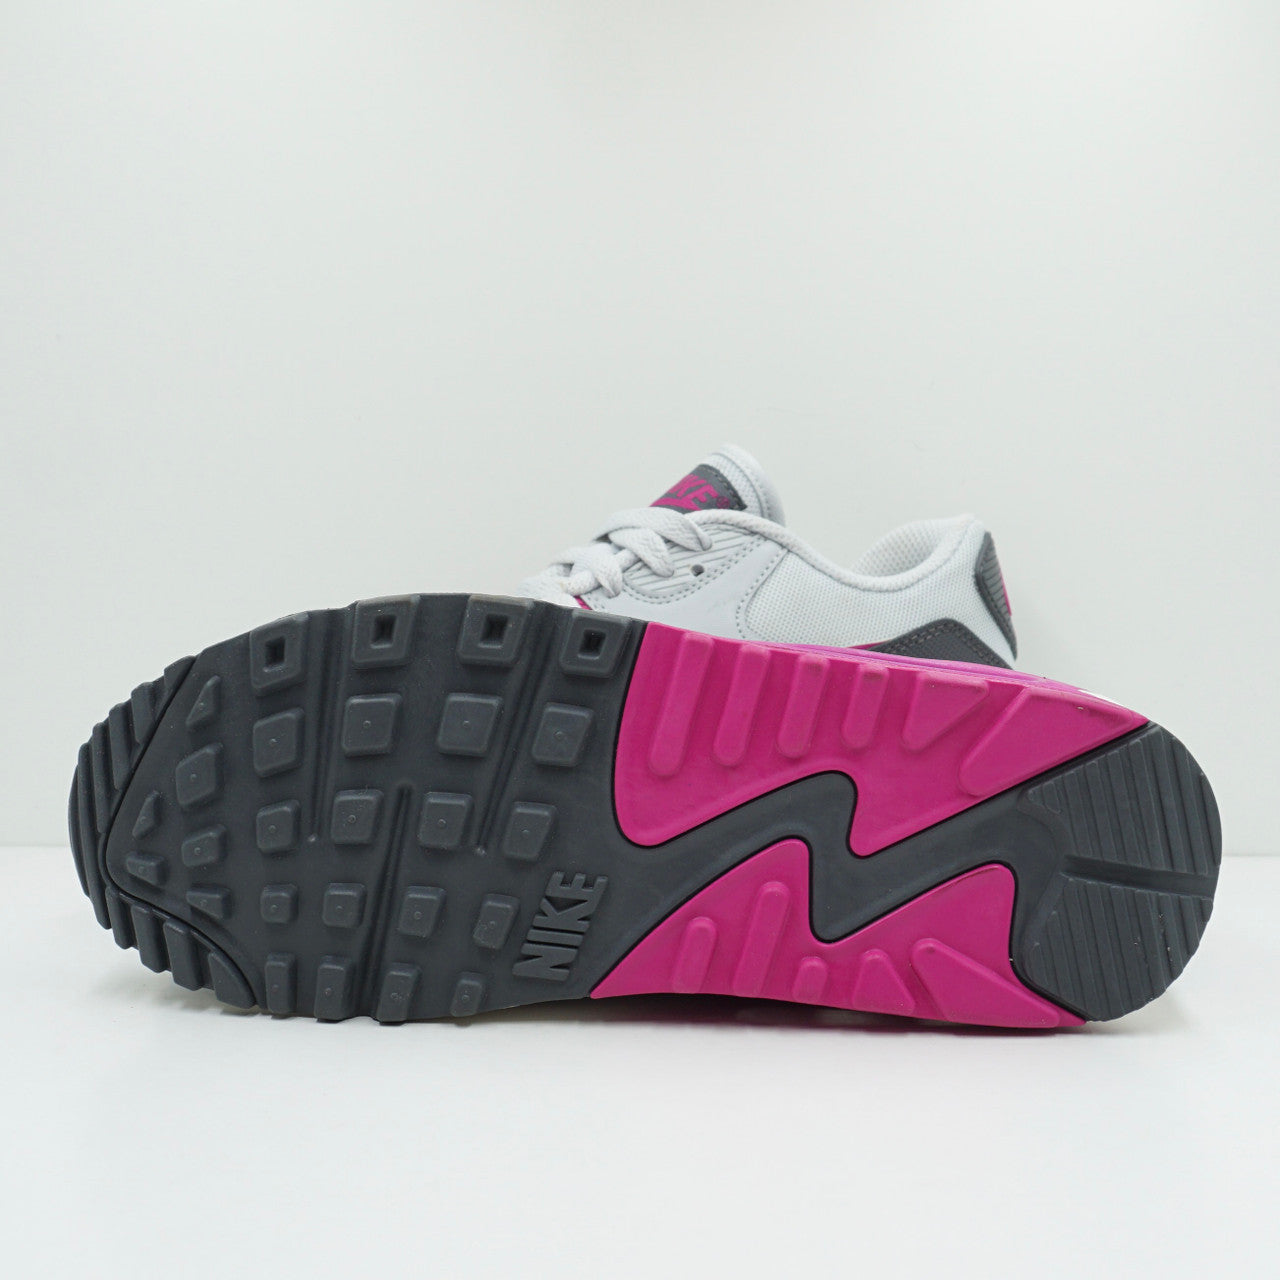 Nike Air Max 90 Essential Grey/Pink (W)